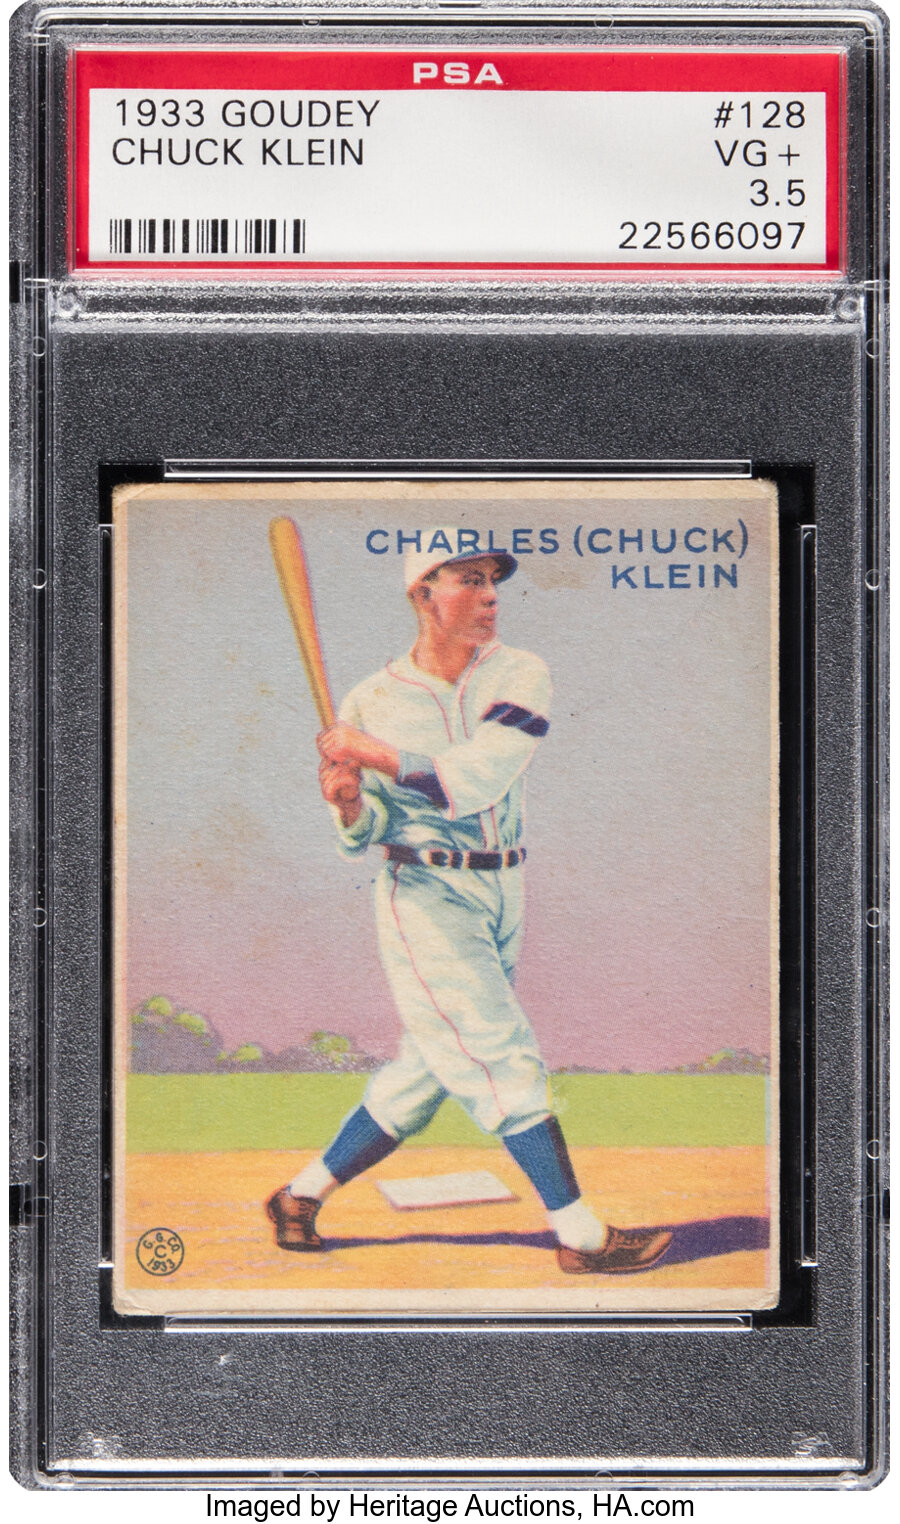 1933 Goudey Chuck Klein #128 PSA VG+ 3.5